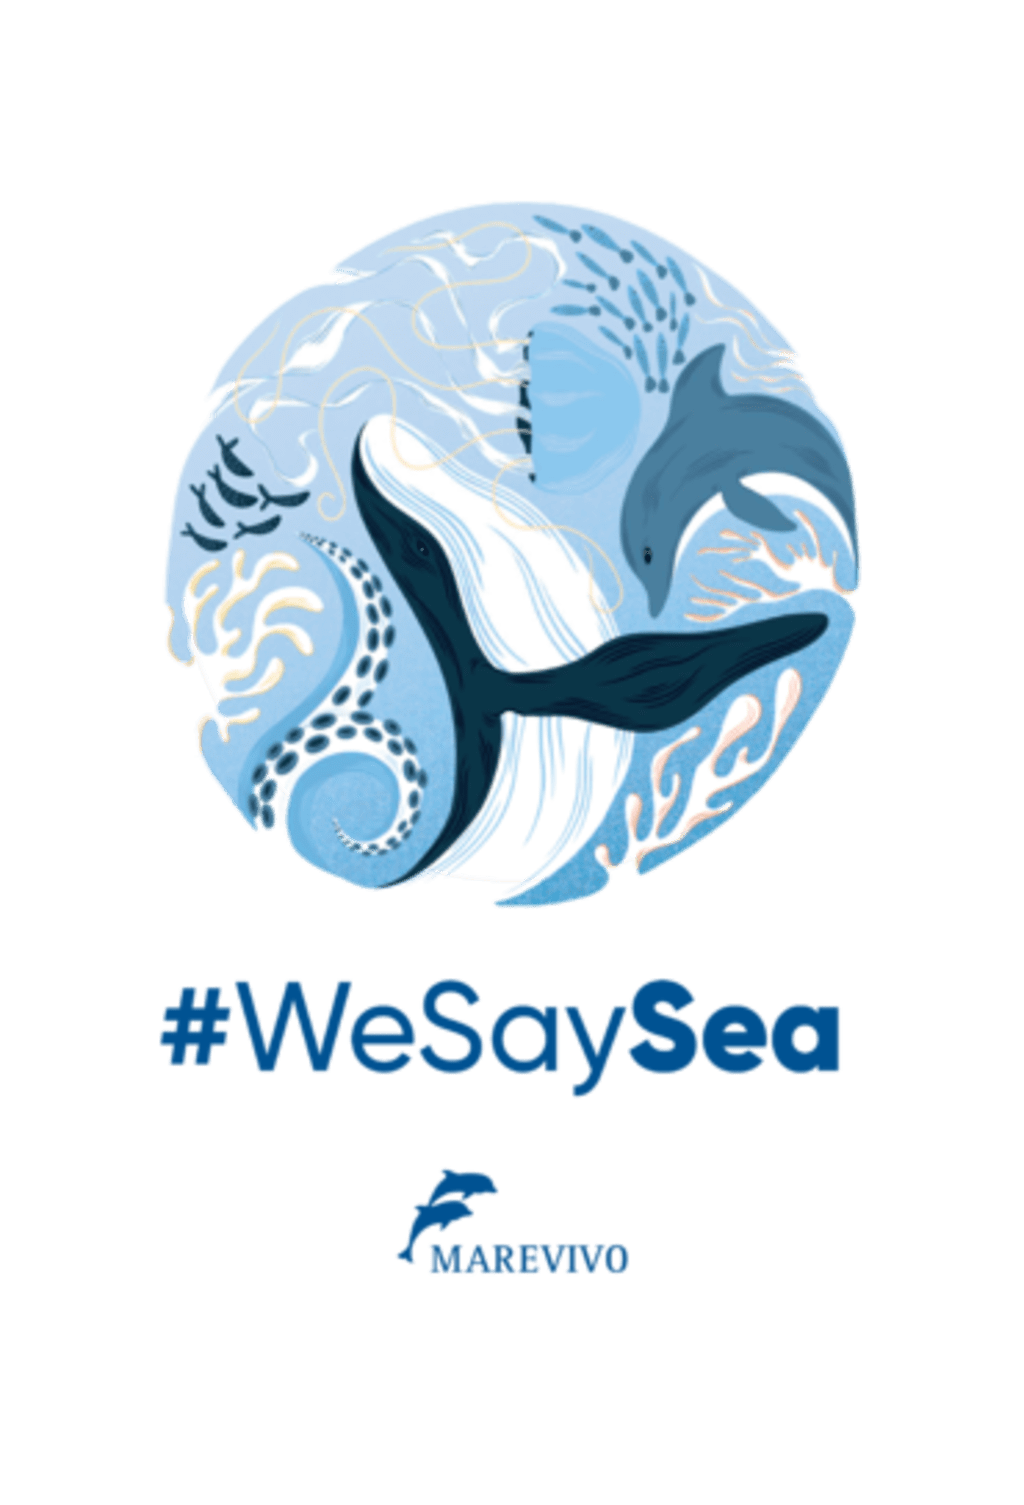 Marevivo #WeSaySea T-shirt